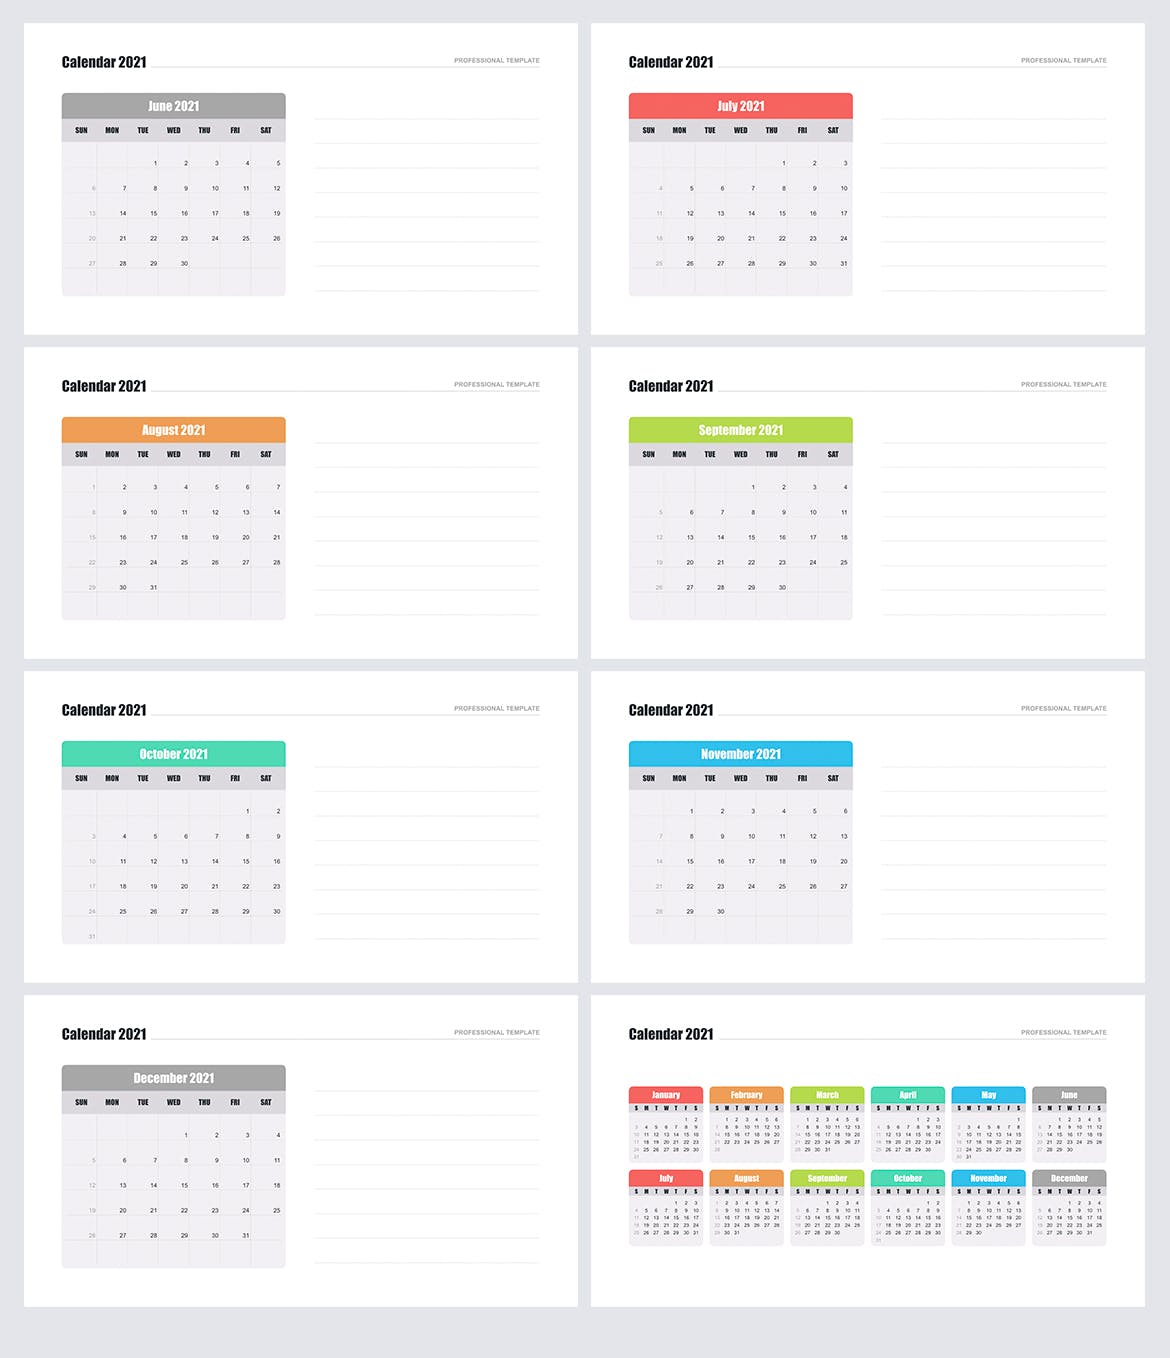 2021年年历设计Keynote幻灯片模板 Calendar 2021 for Keynote插图(4)